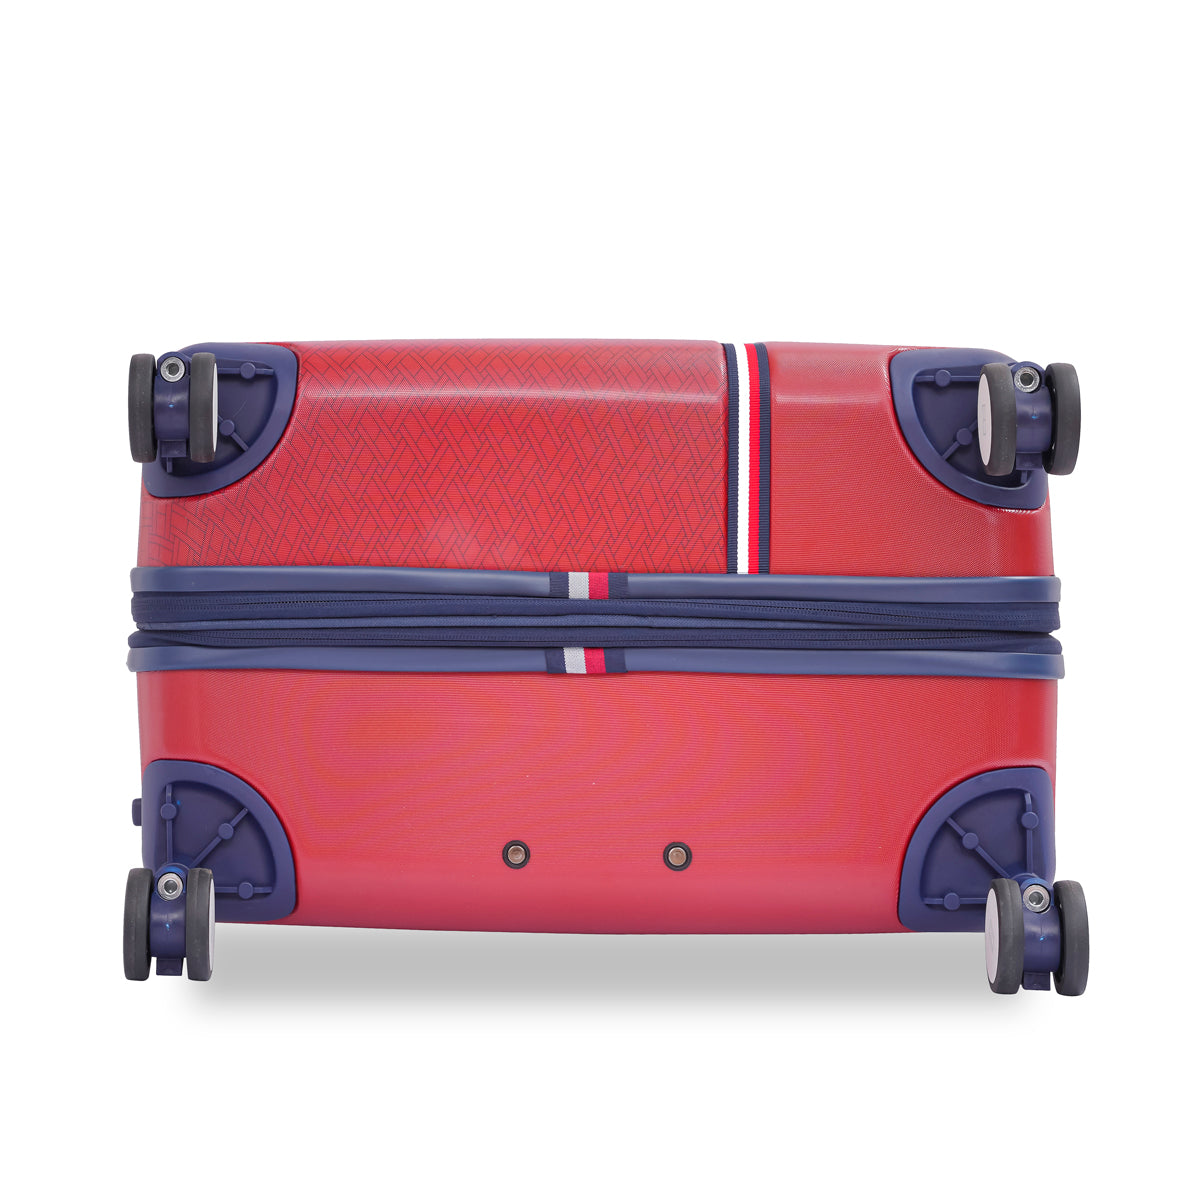 Tommy Hilfiger Millennia Hard Luggage Red Cargo